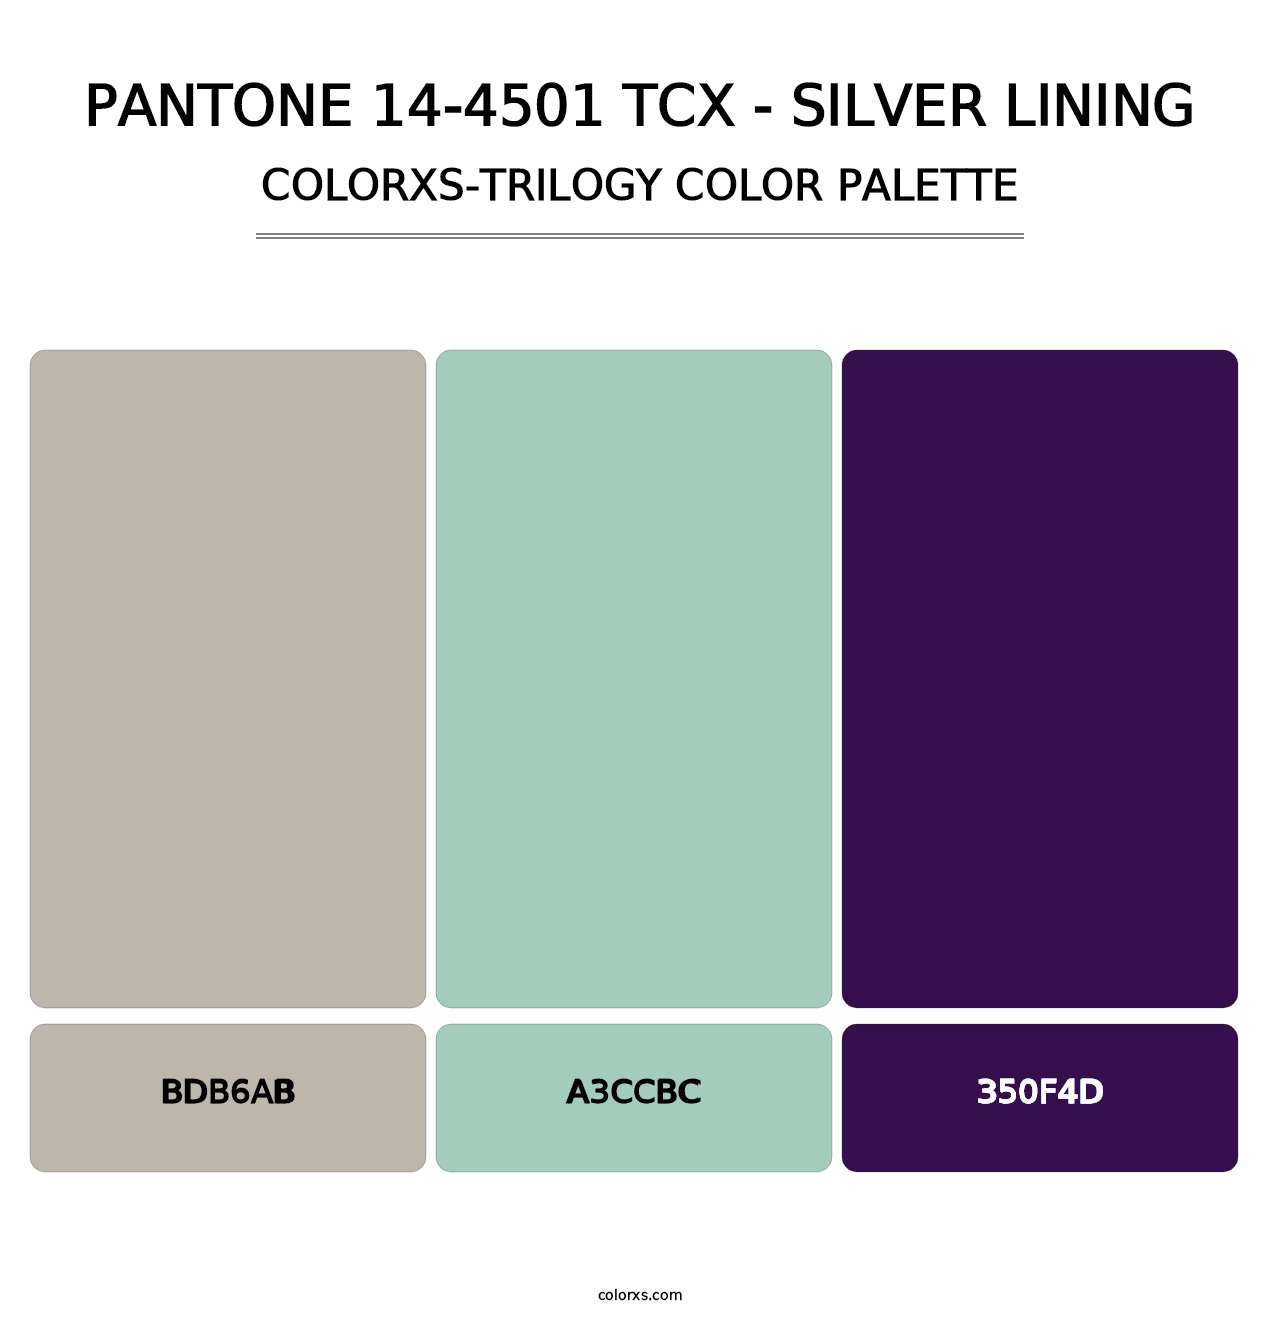 PANTONE 14-4501 TCX - Silver Lining - Colorxs Trilogy Palette